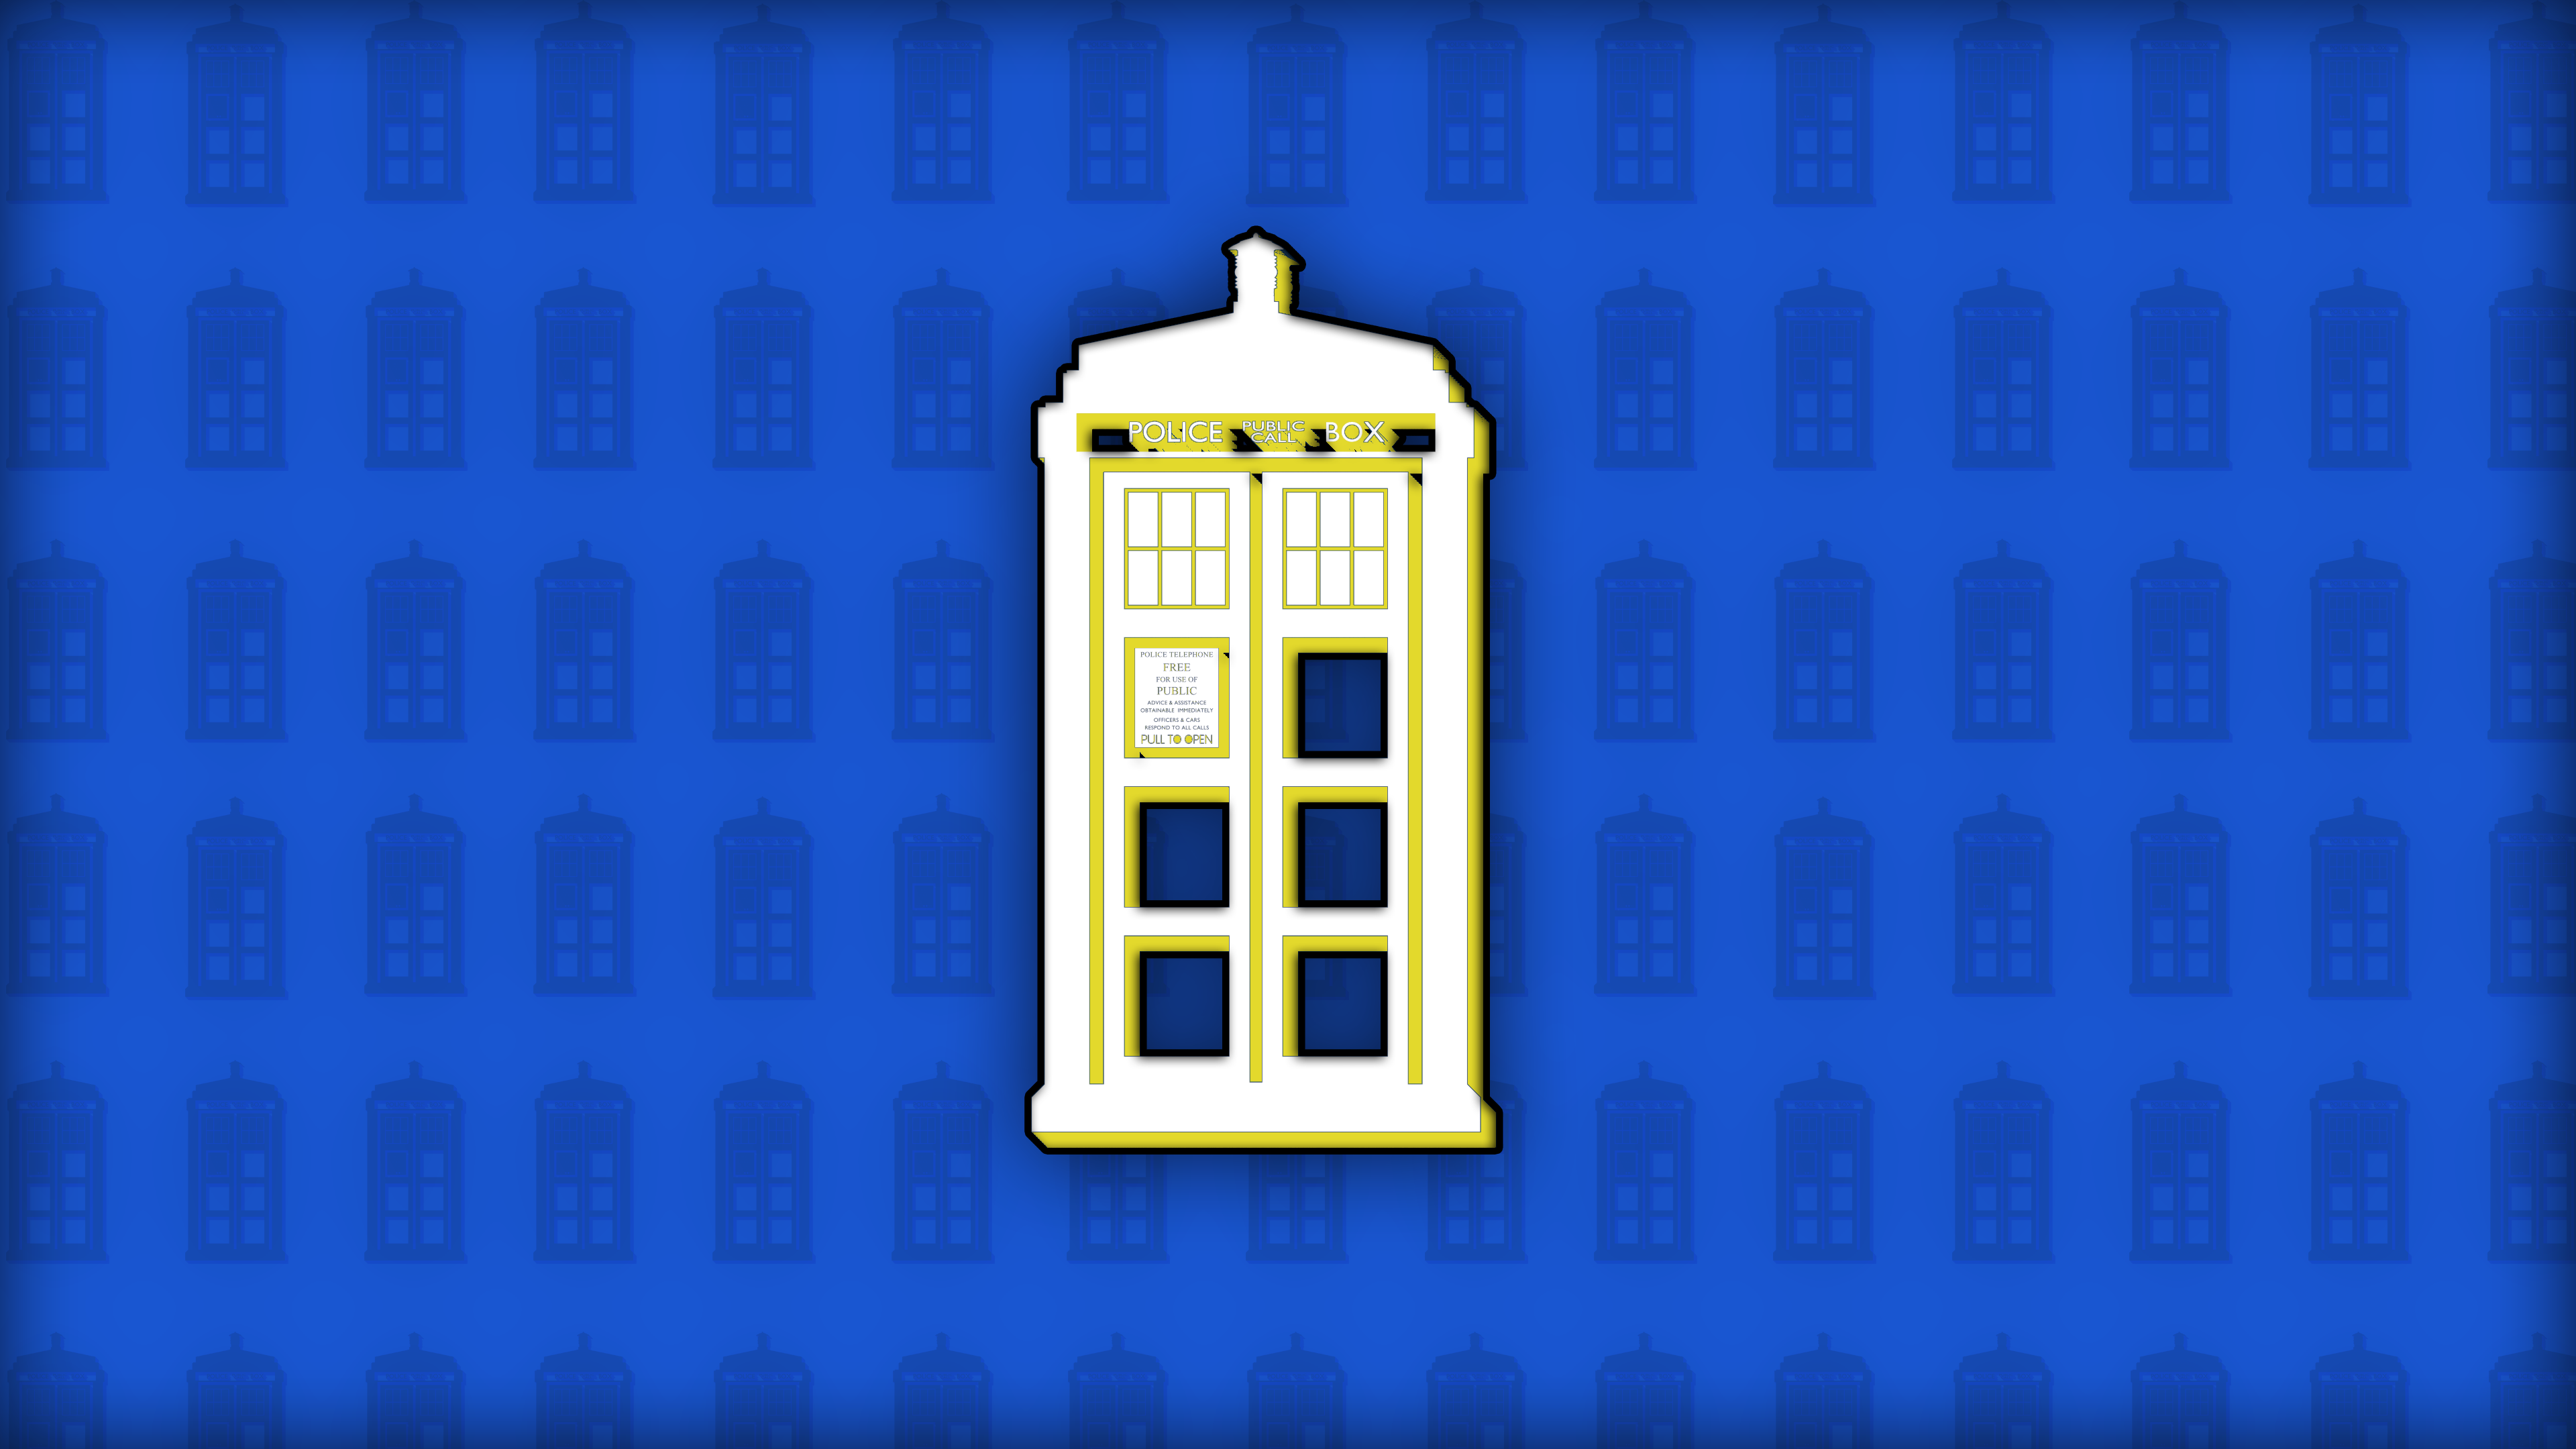 General 3840x2160 Doctor Who TARDIS TV series science fiction blue background digital art